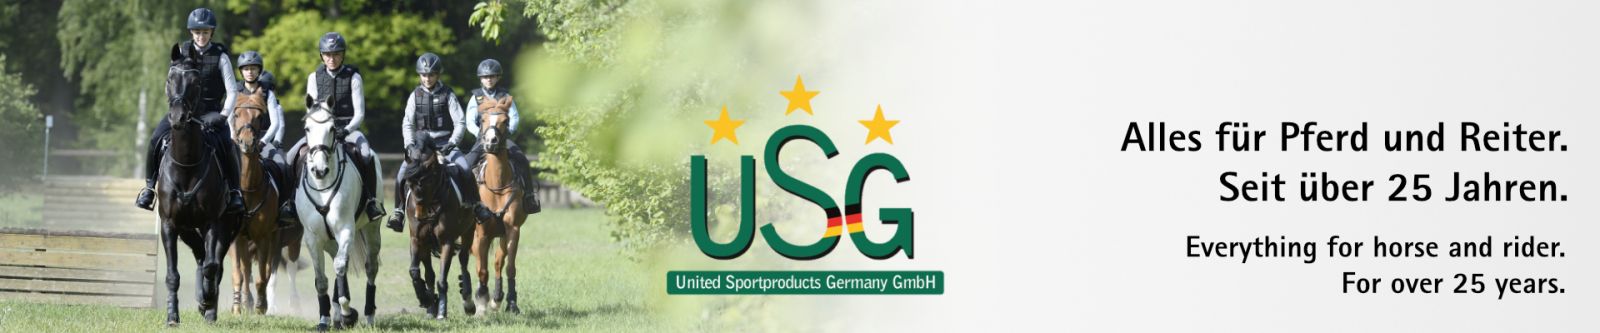 Firmenchronik - USG - United Sportproducts Germany GmbH